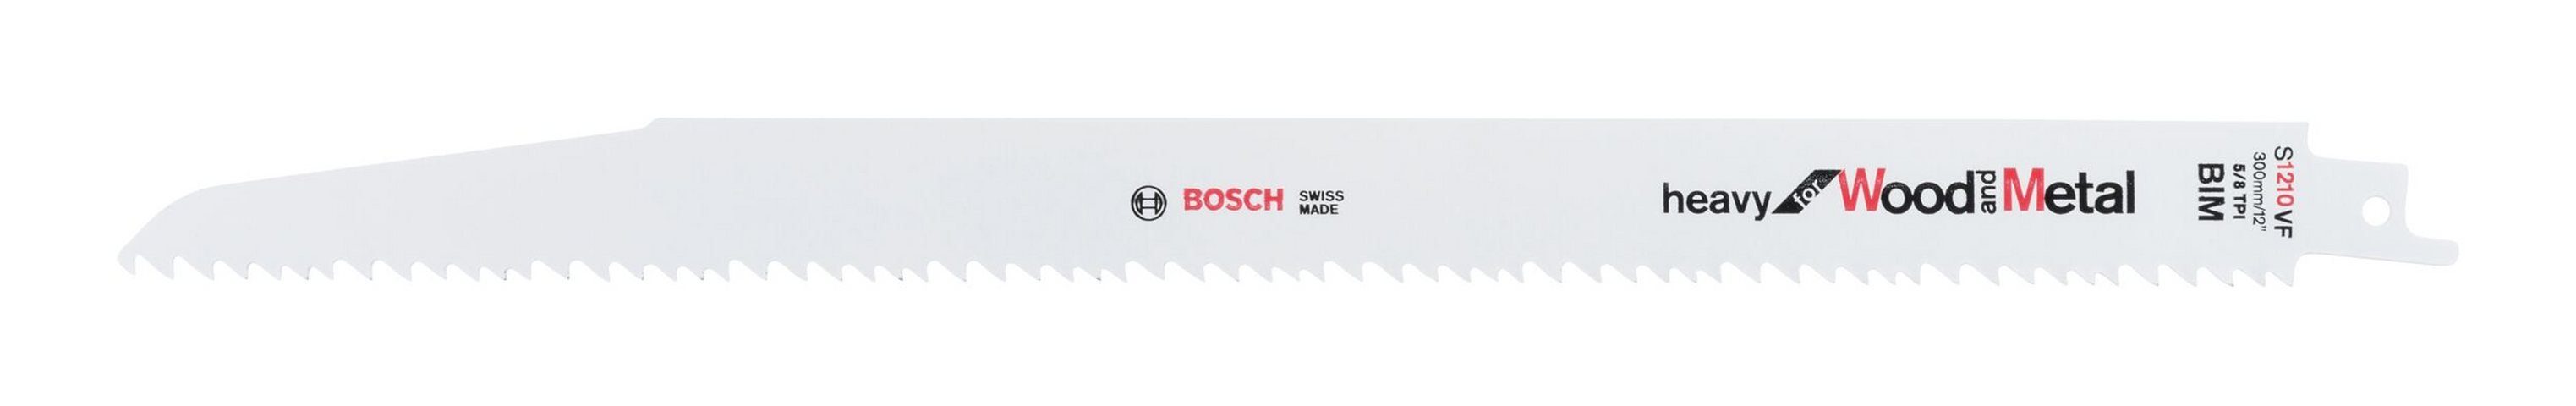 BOSCH Säbelsägeblatt 1210 5er-Pack Metal Stück), Heavy S (5 - and VF Wood for